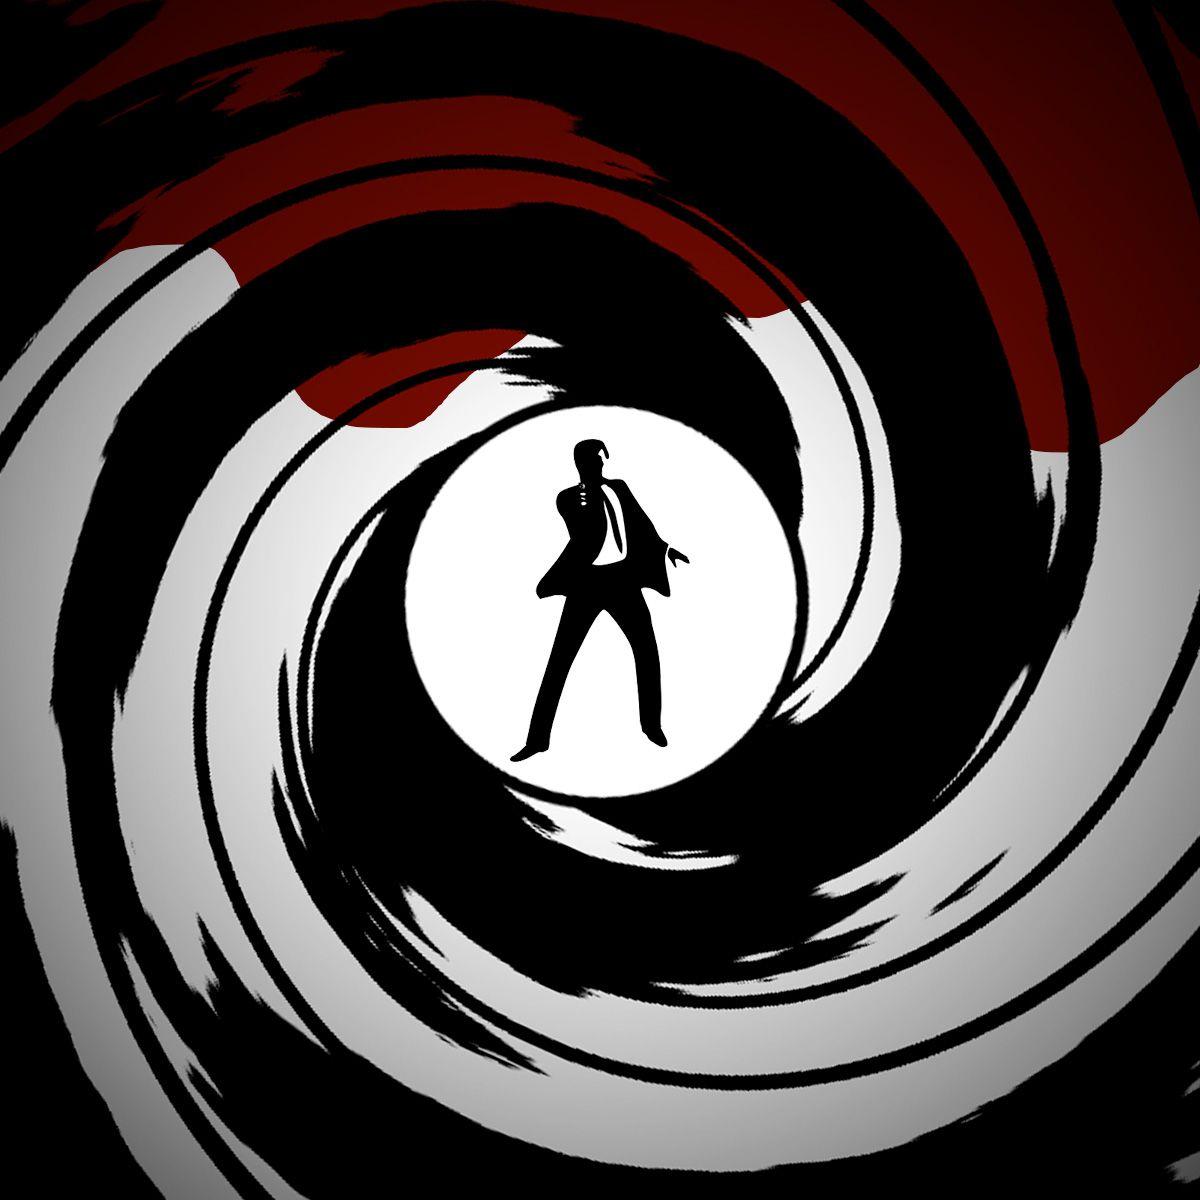 James Bond Spectre wallpaper. James Bond. James bond